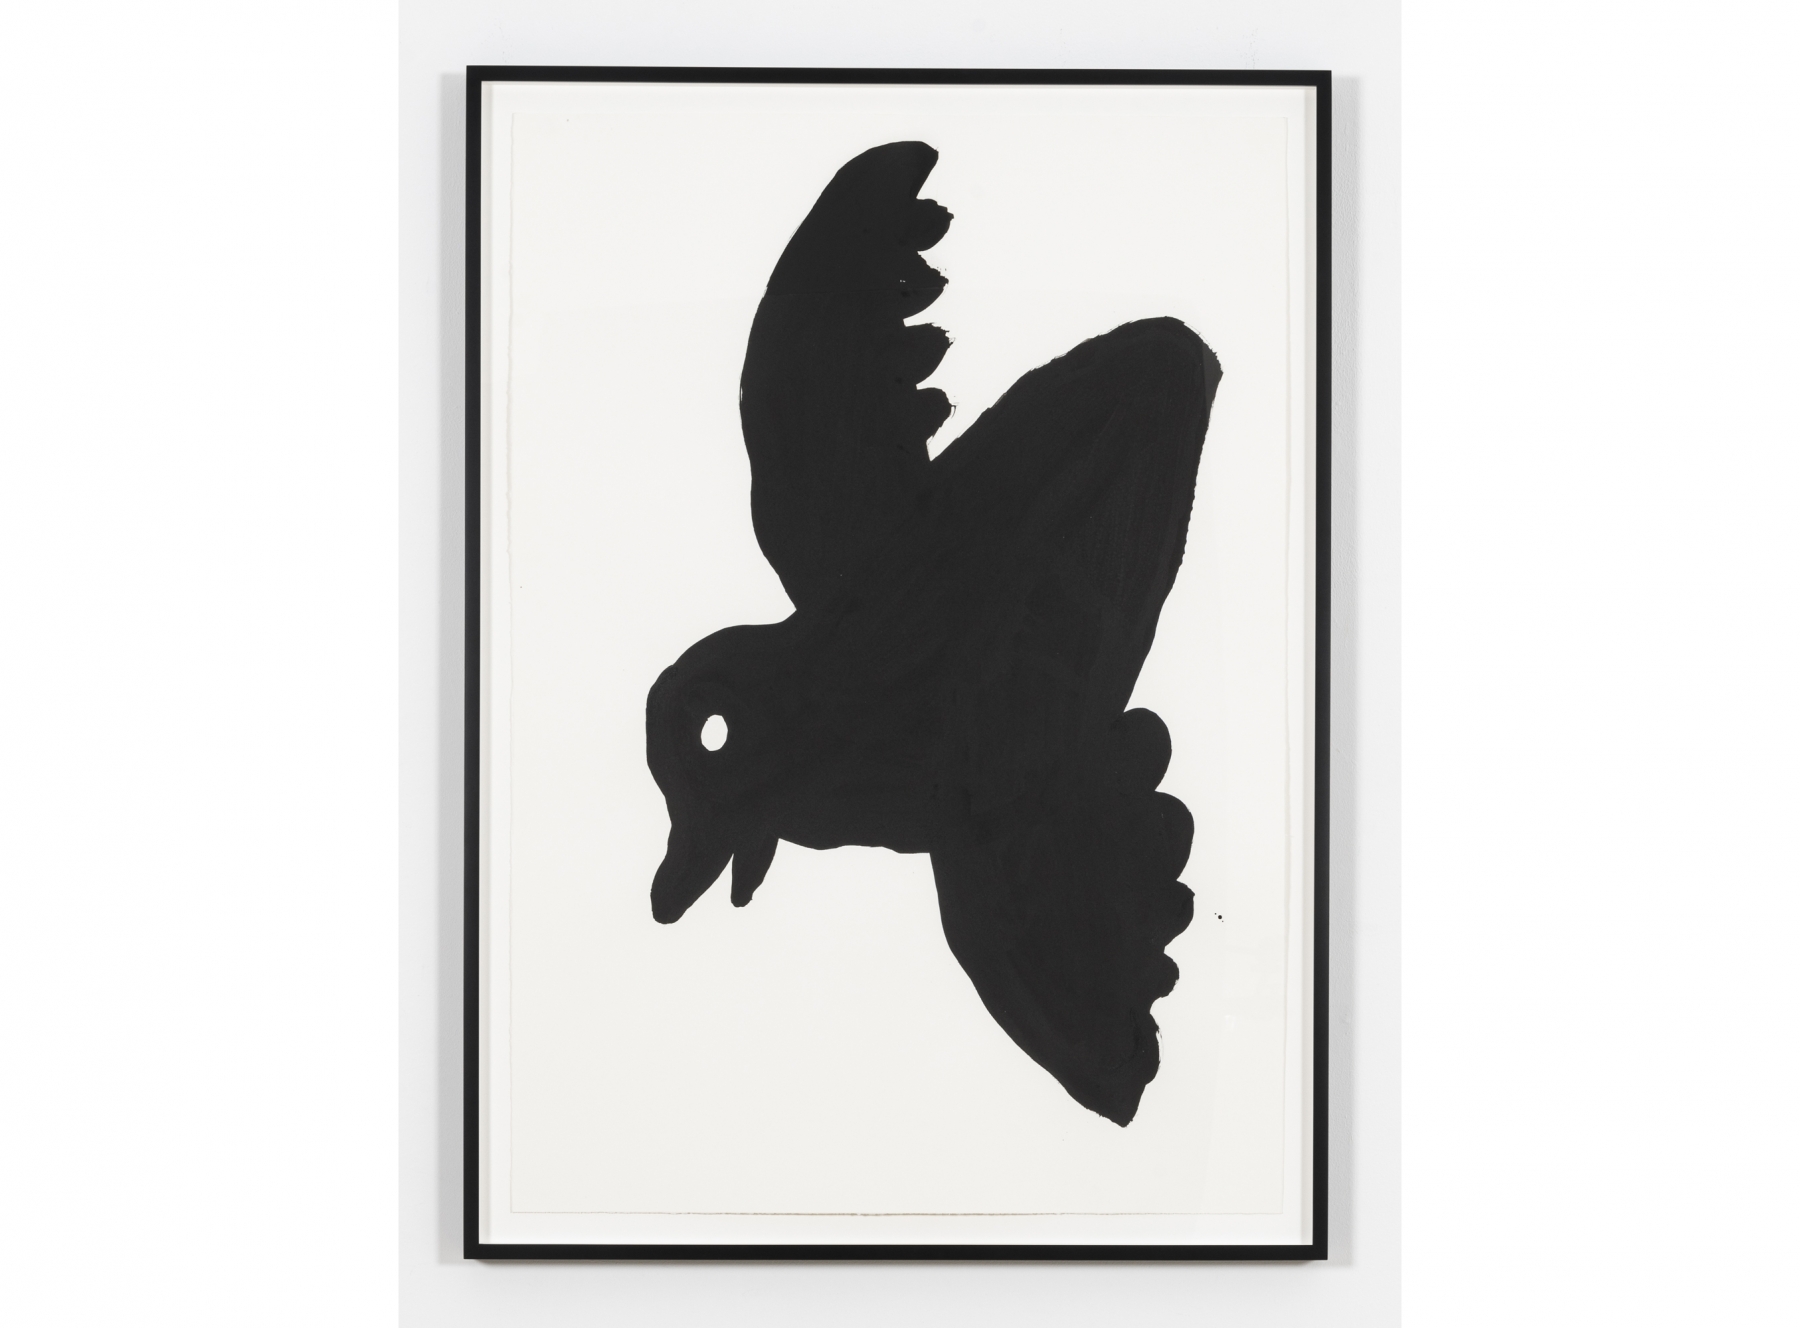 Paul Chan

die Amsel (blackbird), 2020

Ink on paper

Paper: 39 1/4 x 27 1/2 inches (99.7 x 69.9 cm)

Frame: 42 1/2 x 30 7/8 x 1 1/2 inches (108 x 78.4 x 3.8 cm)